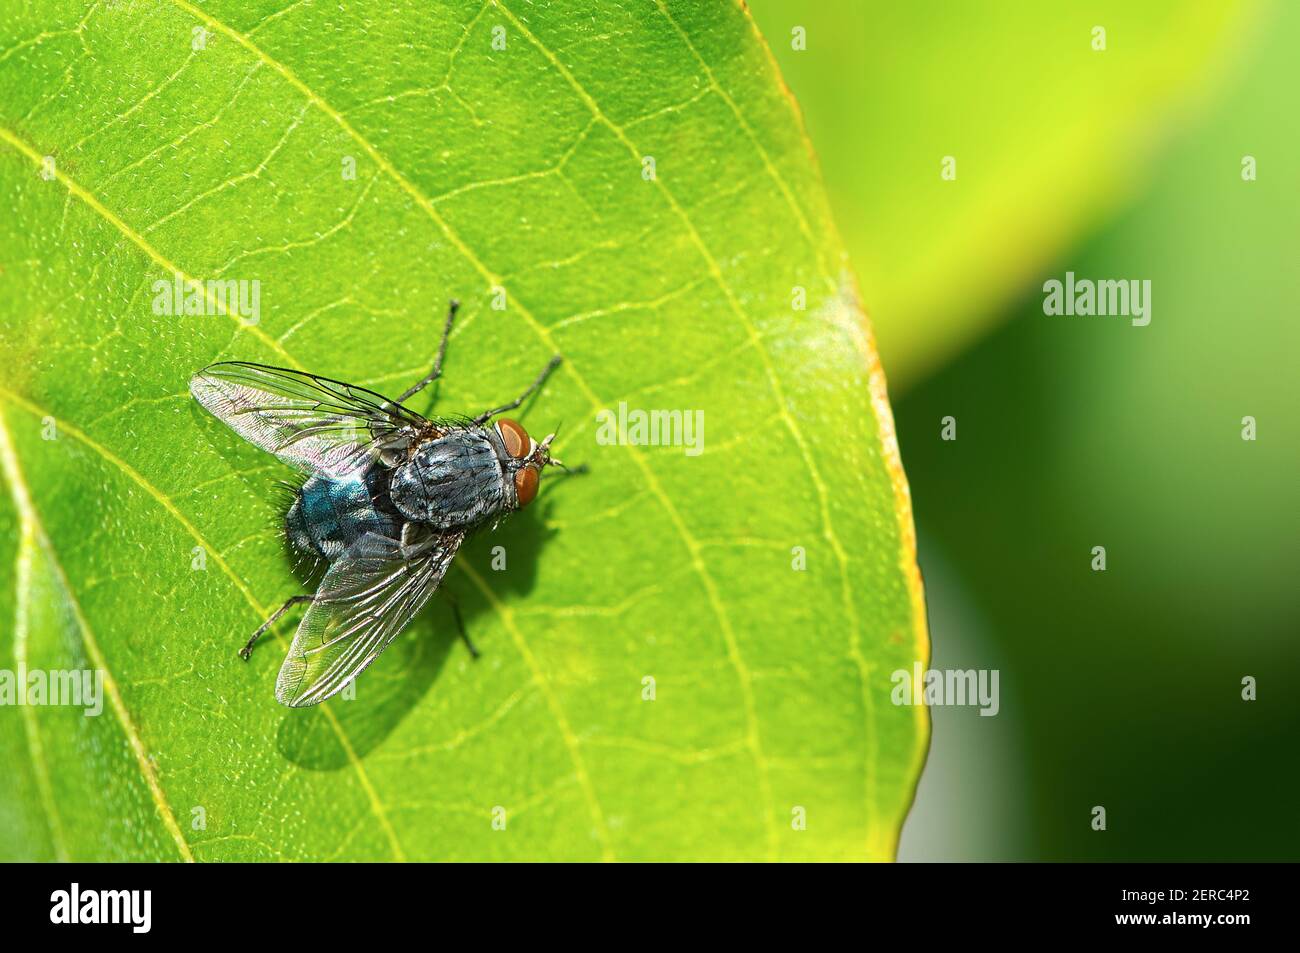 Orange-bearded Bluebottle Fly (Calliphora vomitoria) on a green leaf. Stock Photo